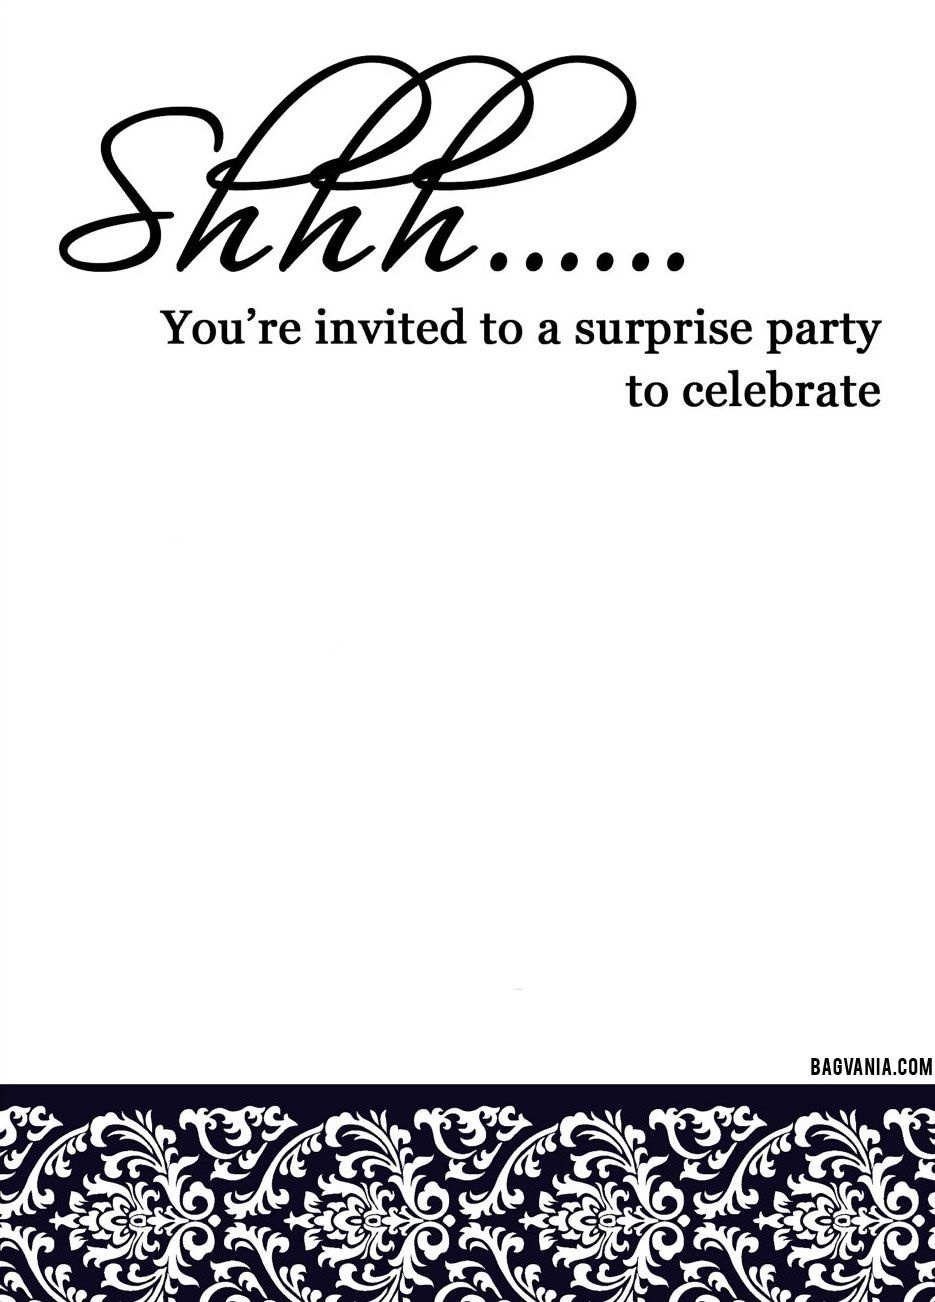 Download Now Free Adult Birthday Invitations | Bagvania Invitation - Free Printable Surprise Party Invitations